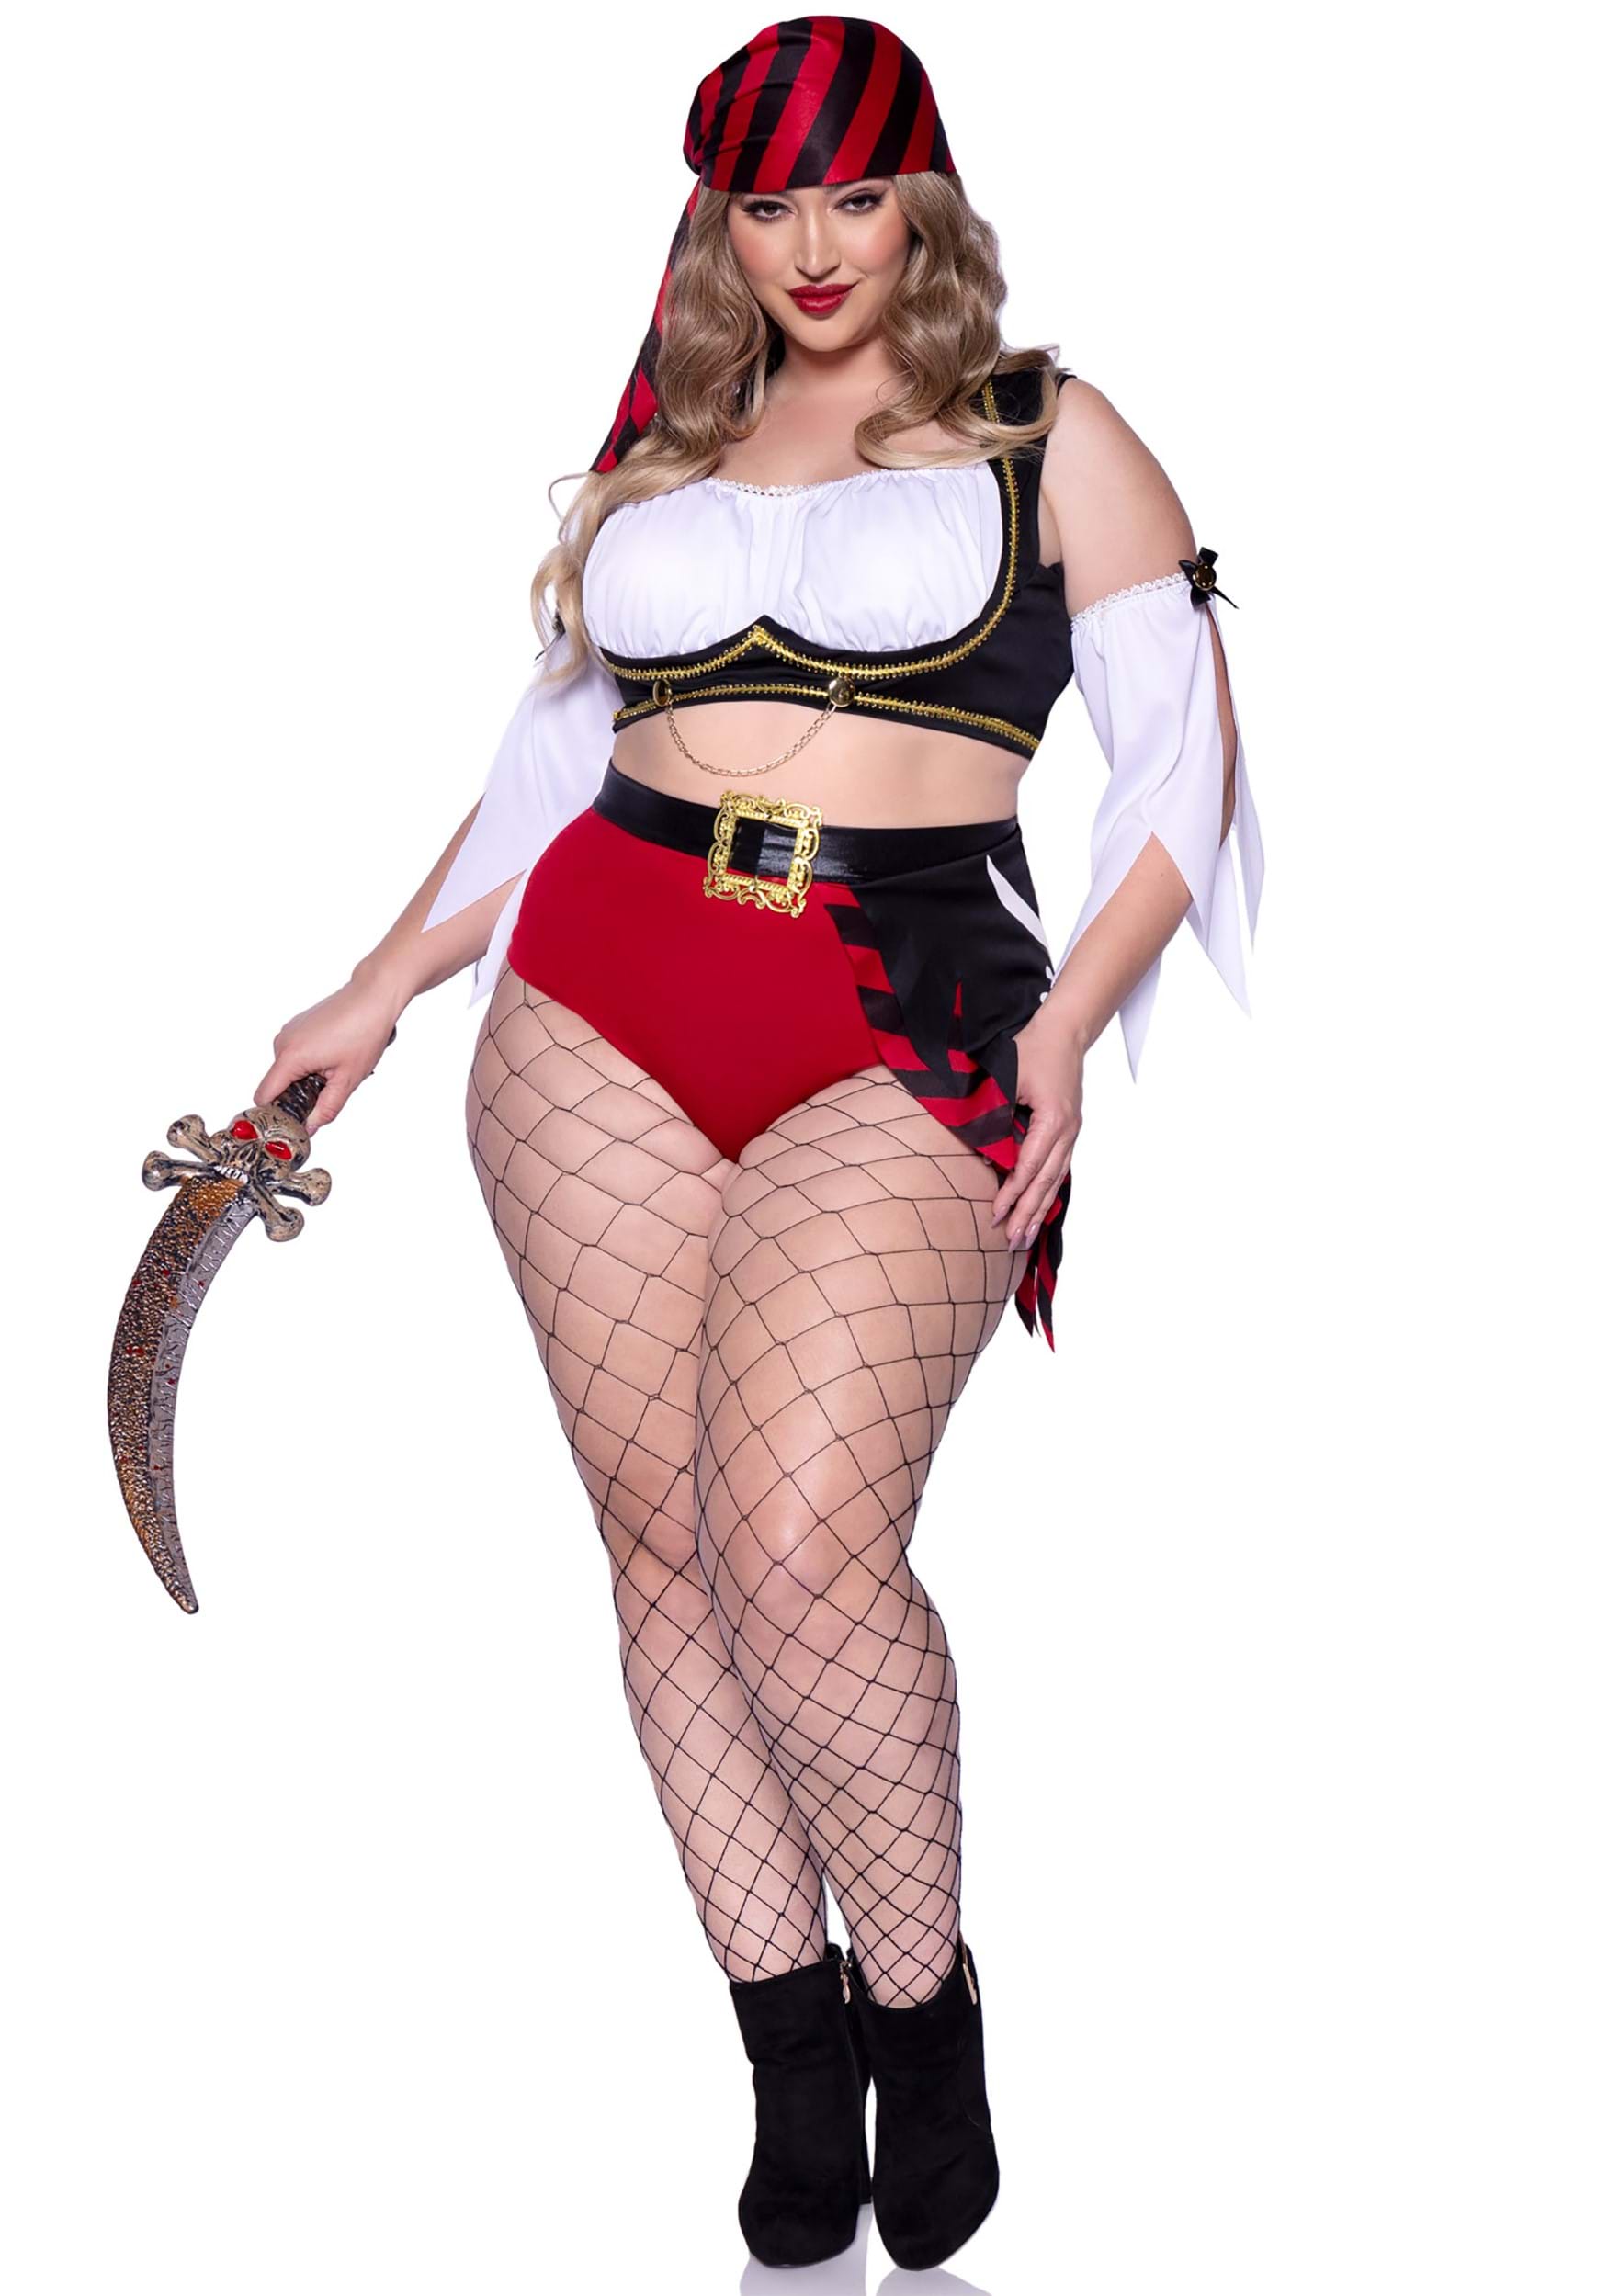 Women's Pirate Costumes - Sexy Pirate Costumes